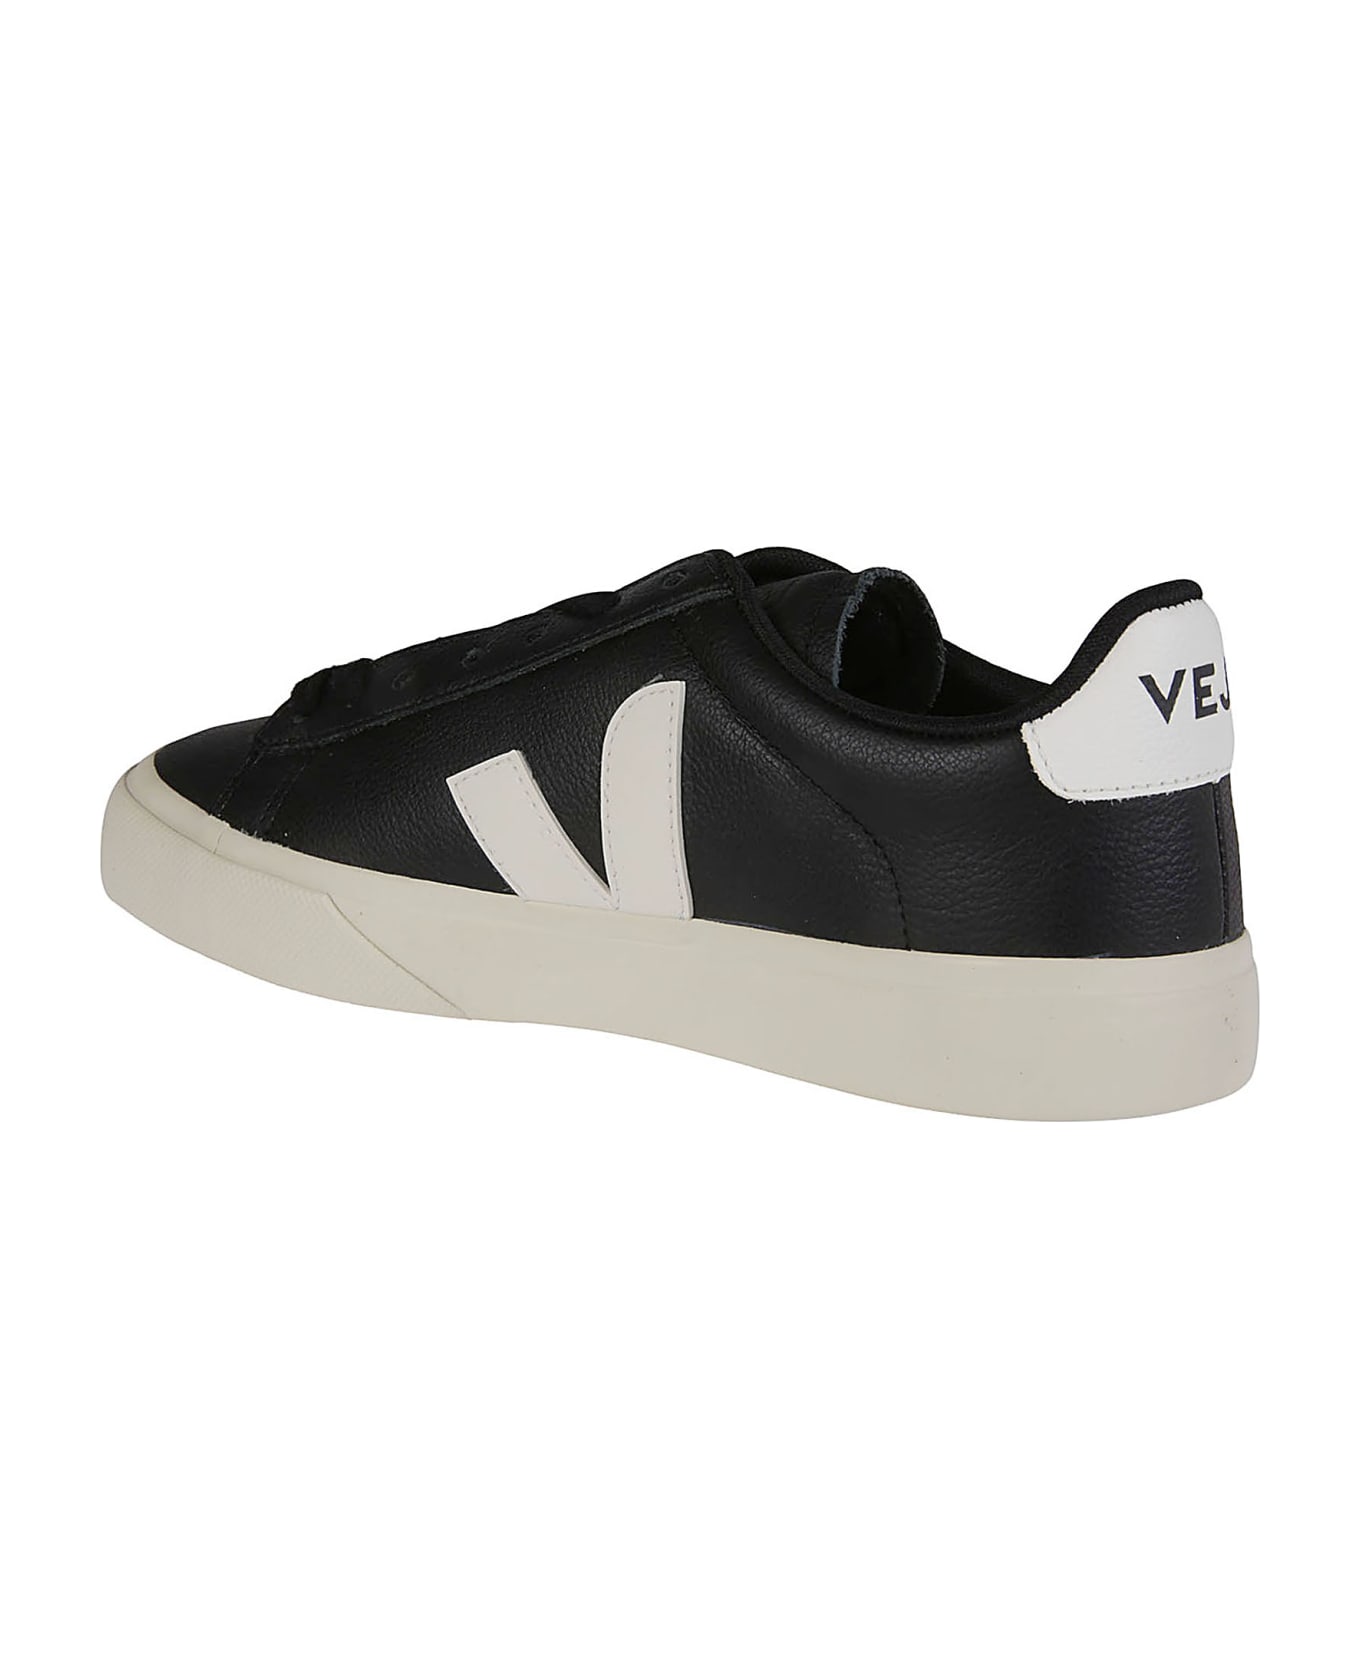 Veja Campo Sneakers - Black/white スニーカー